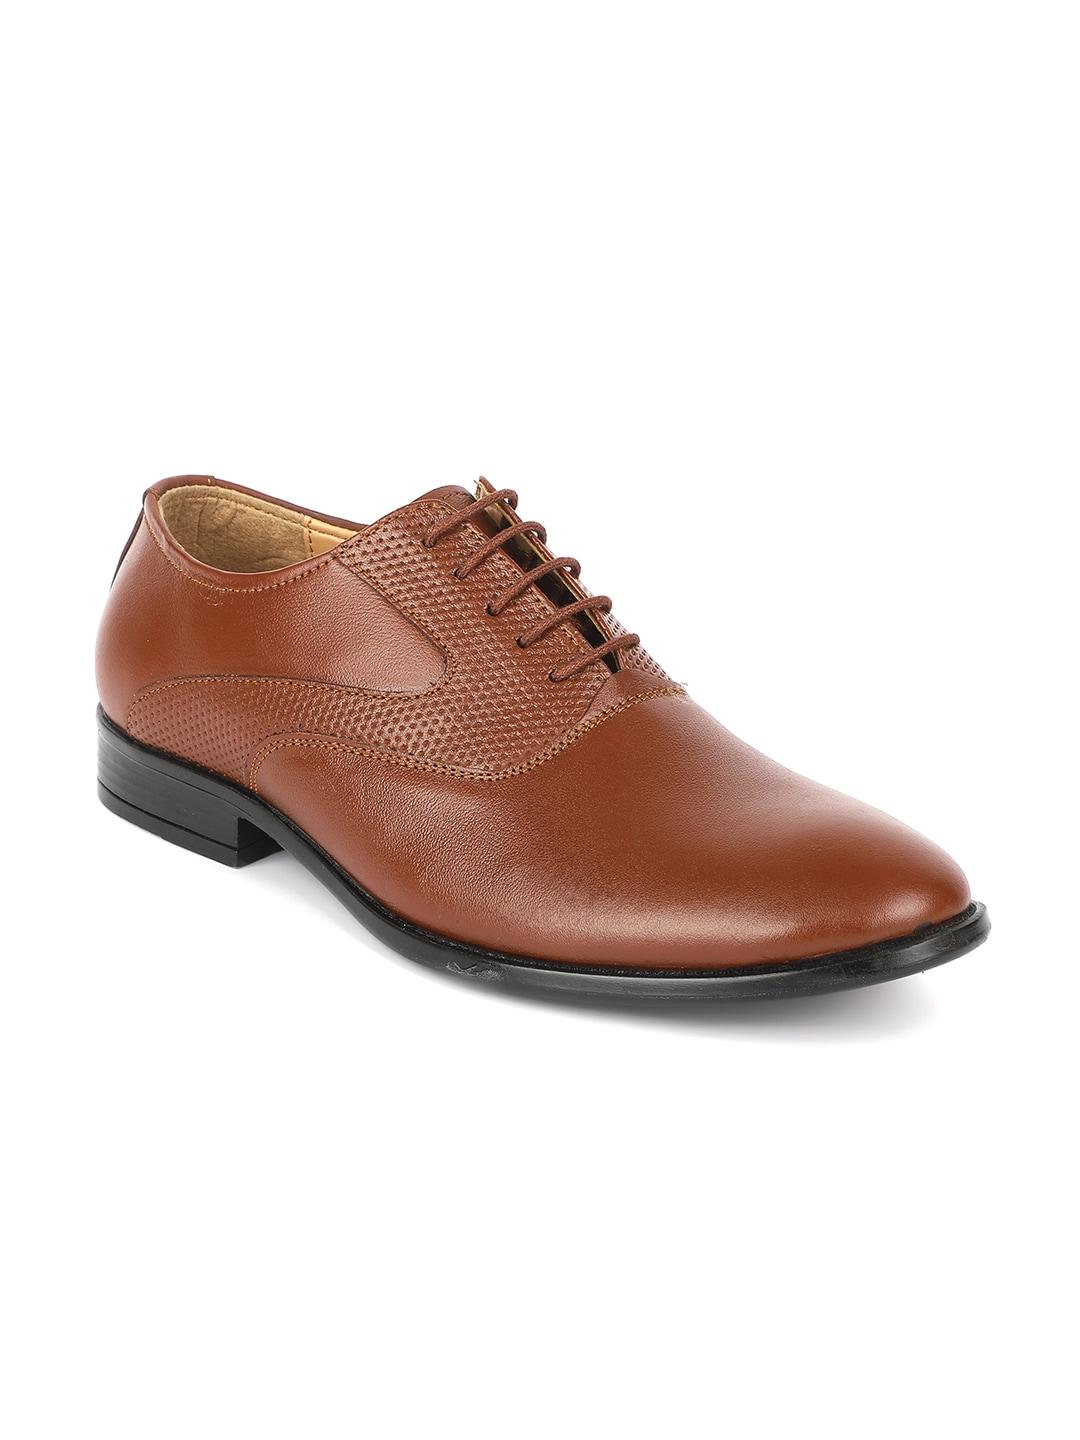 carlton-london-men-textured-lace-ups-leather-formal-derbys